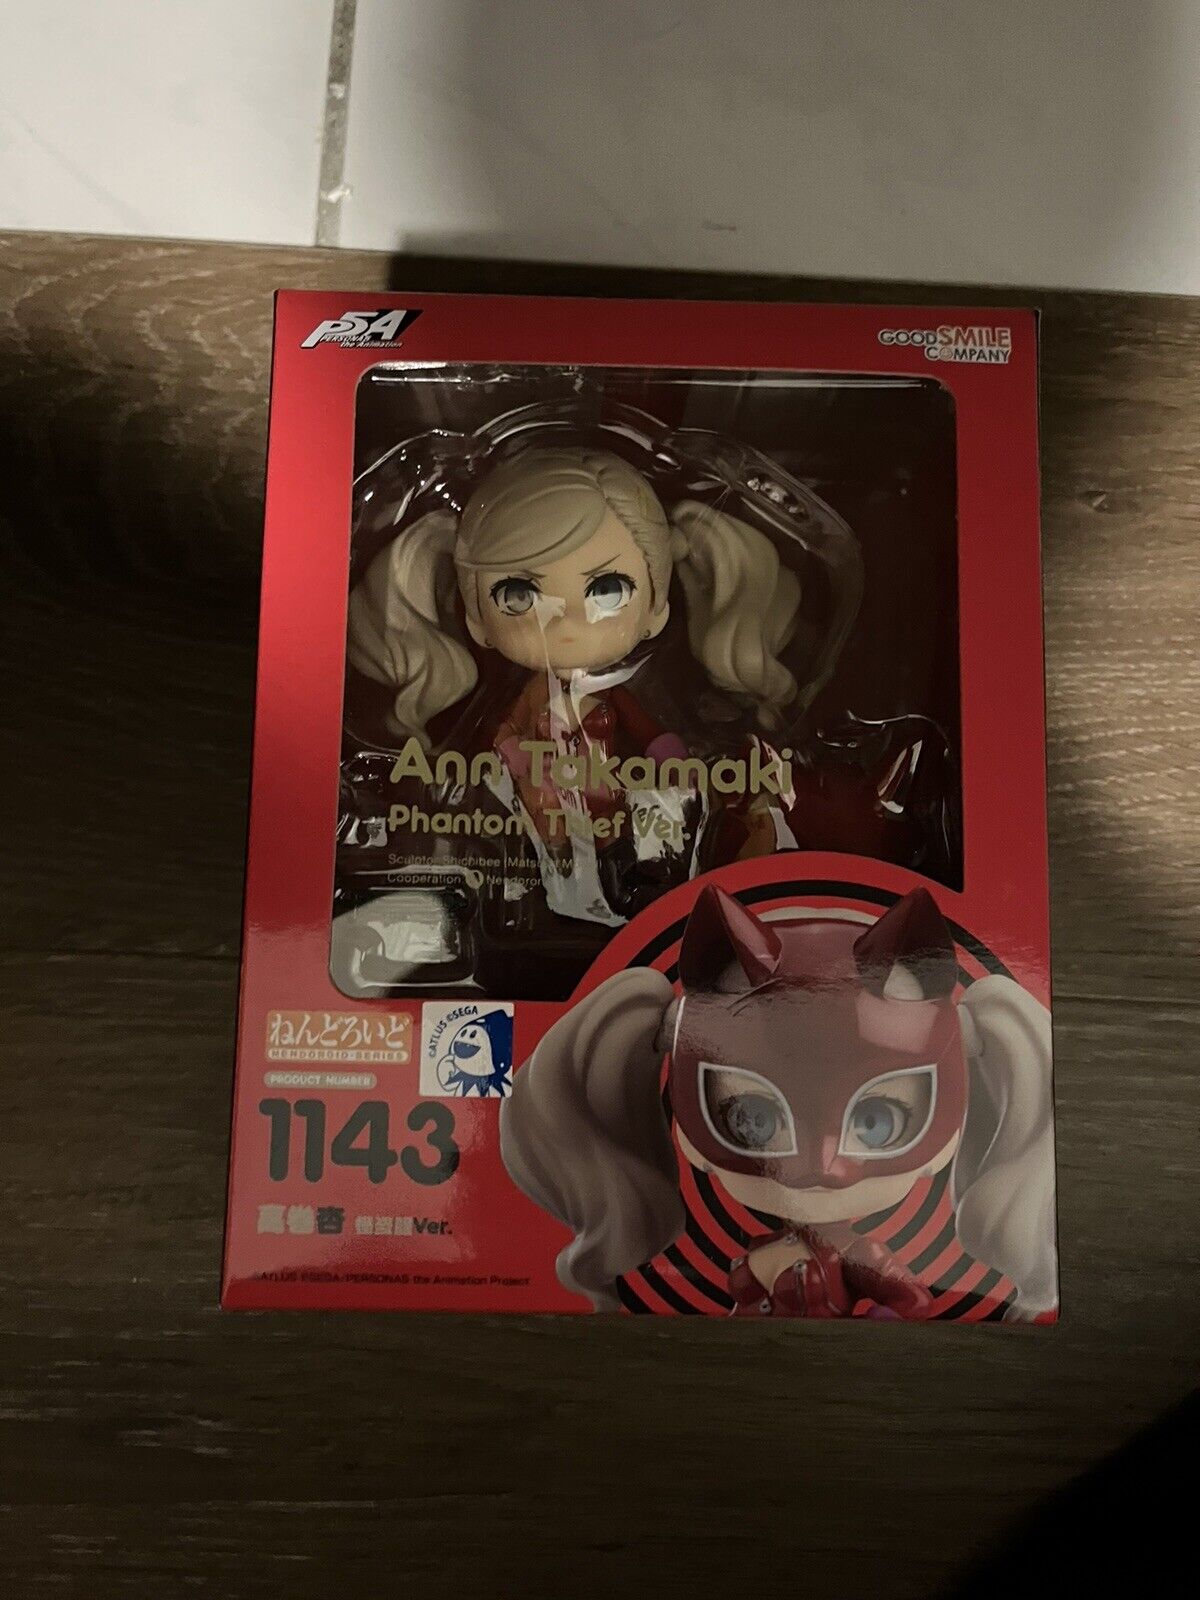 Persona 5 Anne Takamaki Phantom Thief Ver. Good Smile Company Nendoroid 1143